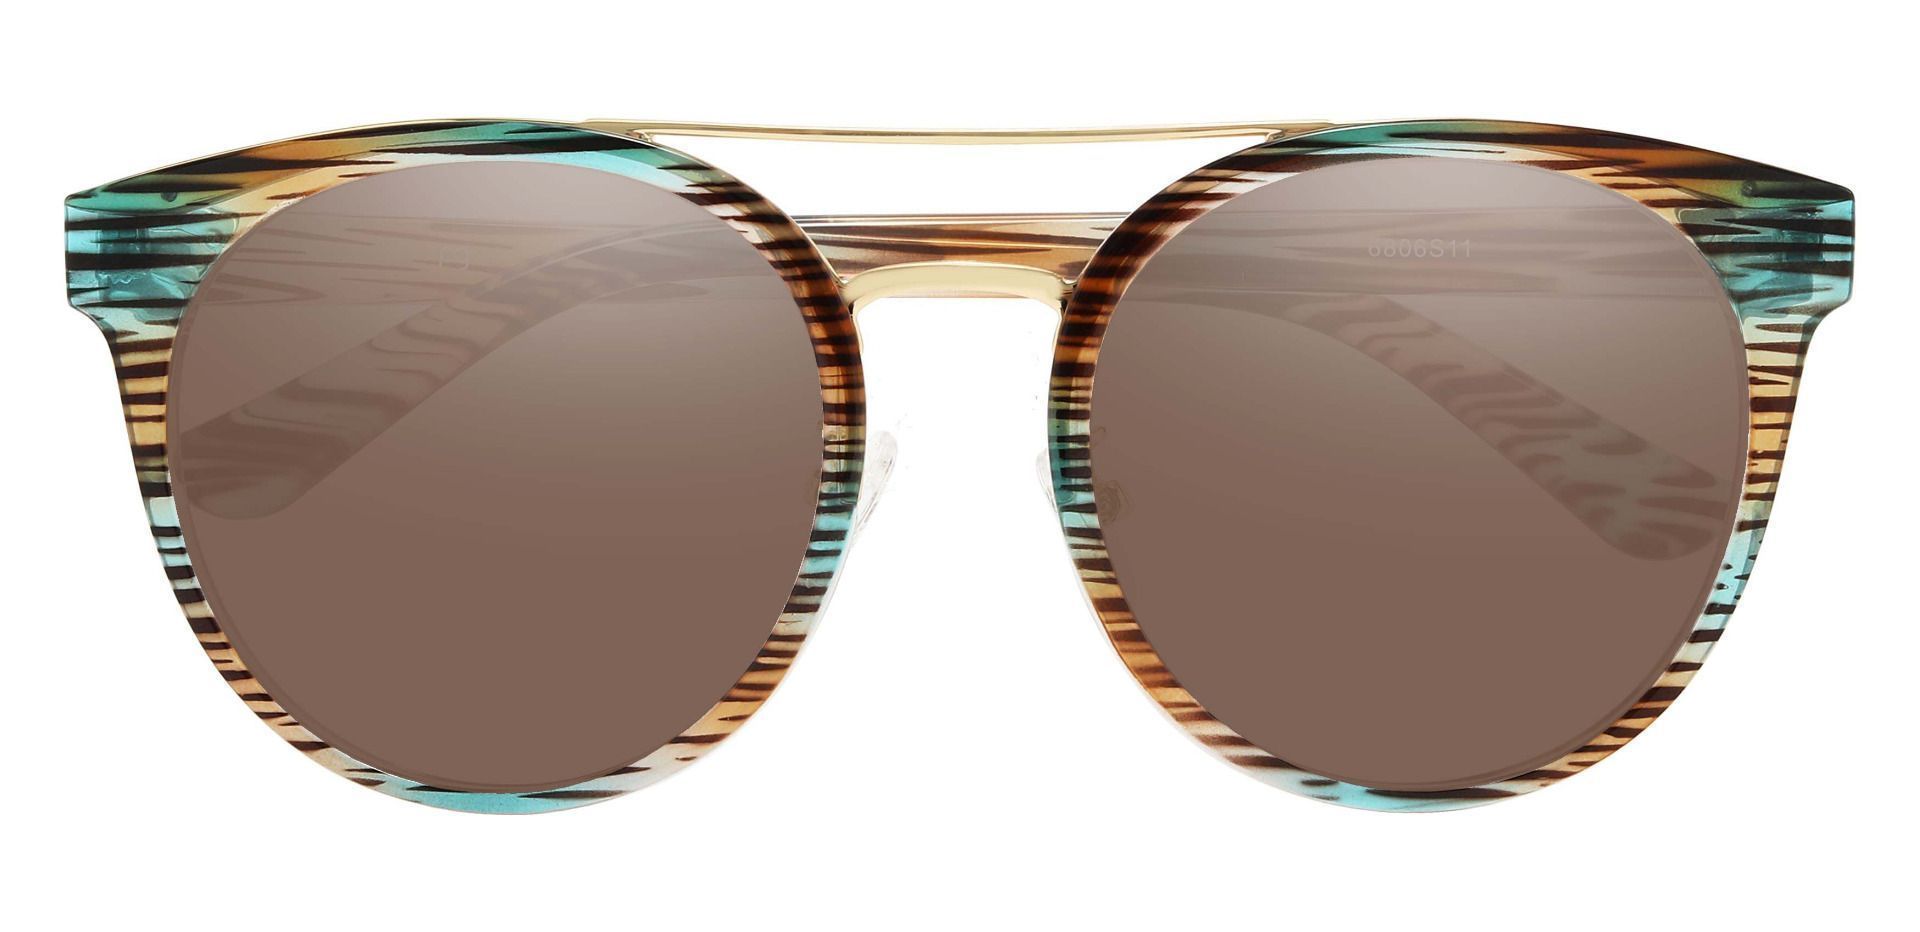 Oasis Aviator Prescription Sunglasses - Striped Frame With Brown Lenses